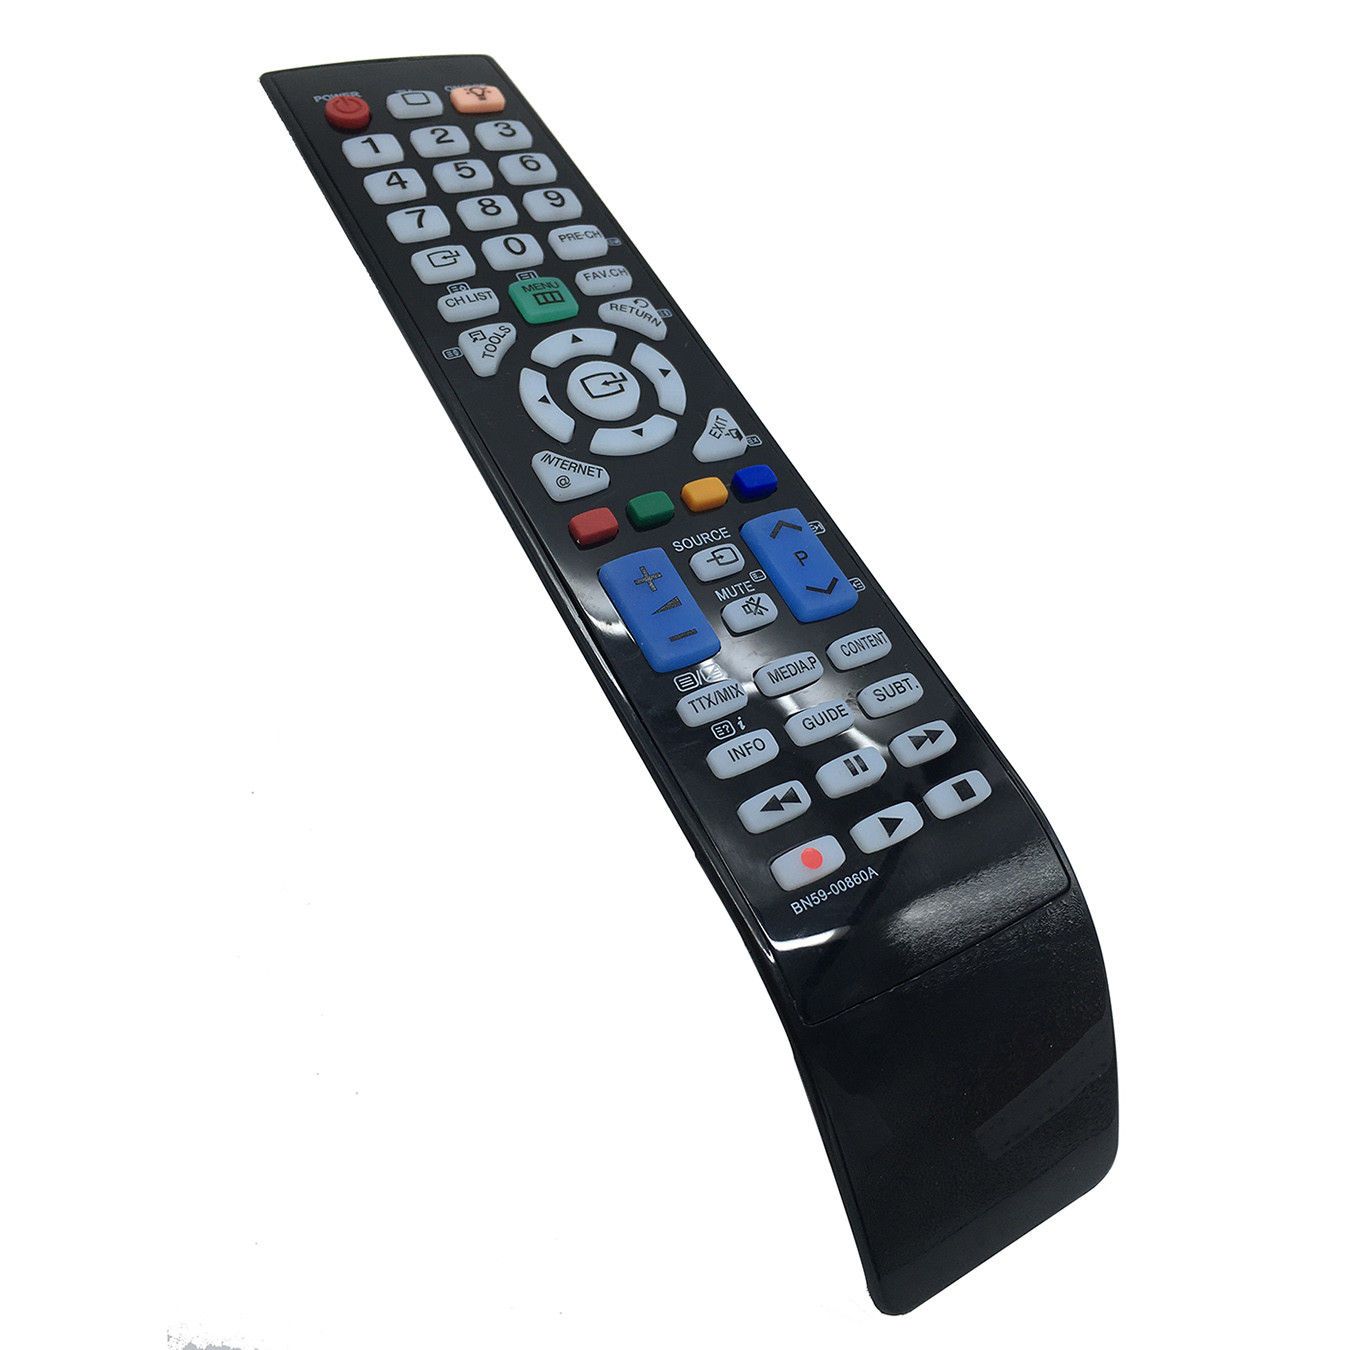 BN59-00860A TV Replacement Remote Control for Samsung TV LE46B650 LE46B651 LE46B652 LE46B653